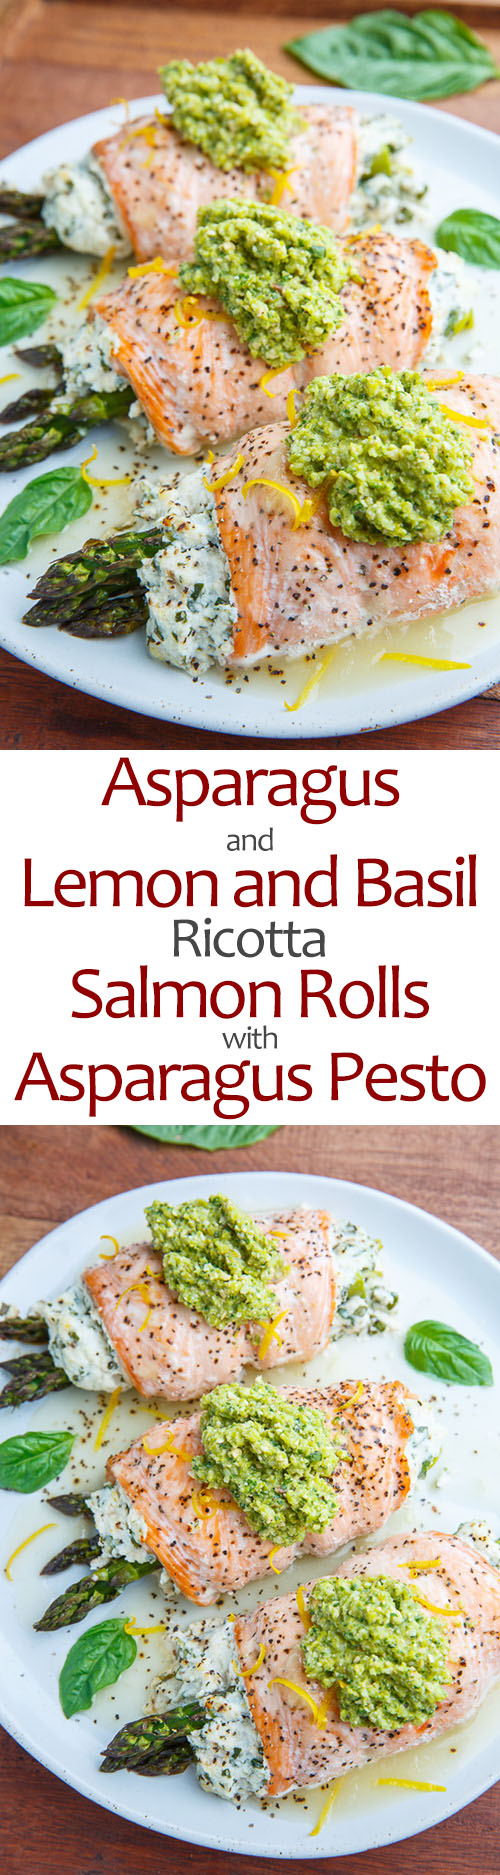 Asparagus and Lemon and Basil Ricotta Stuffed Salmon Rolls with Asparagus Pesto